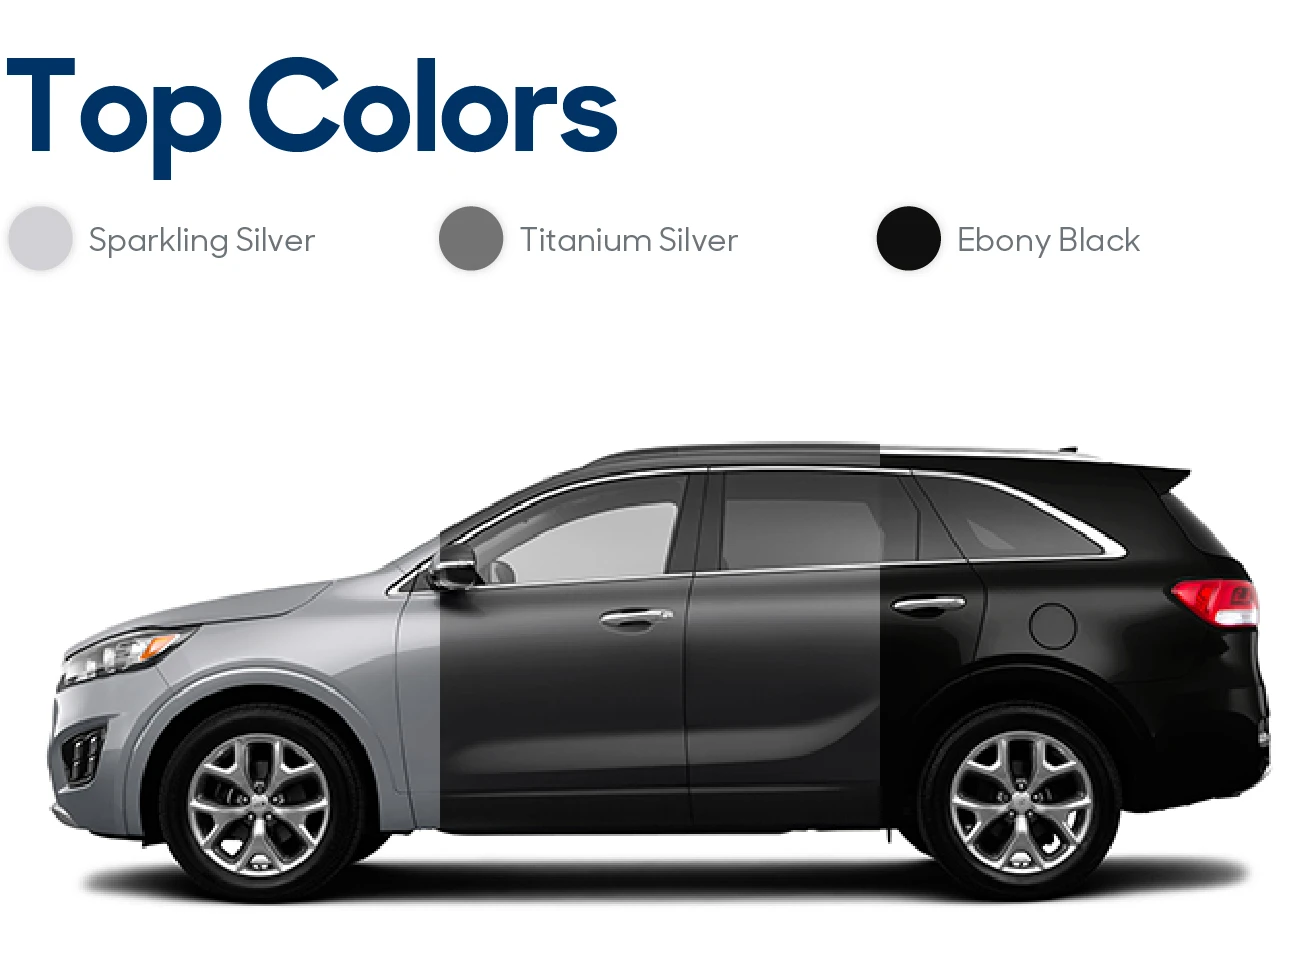 2016 Kia Sorento Review: Top Colors | CarMax